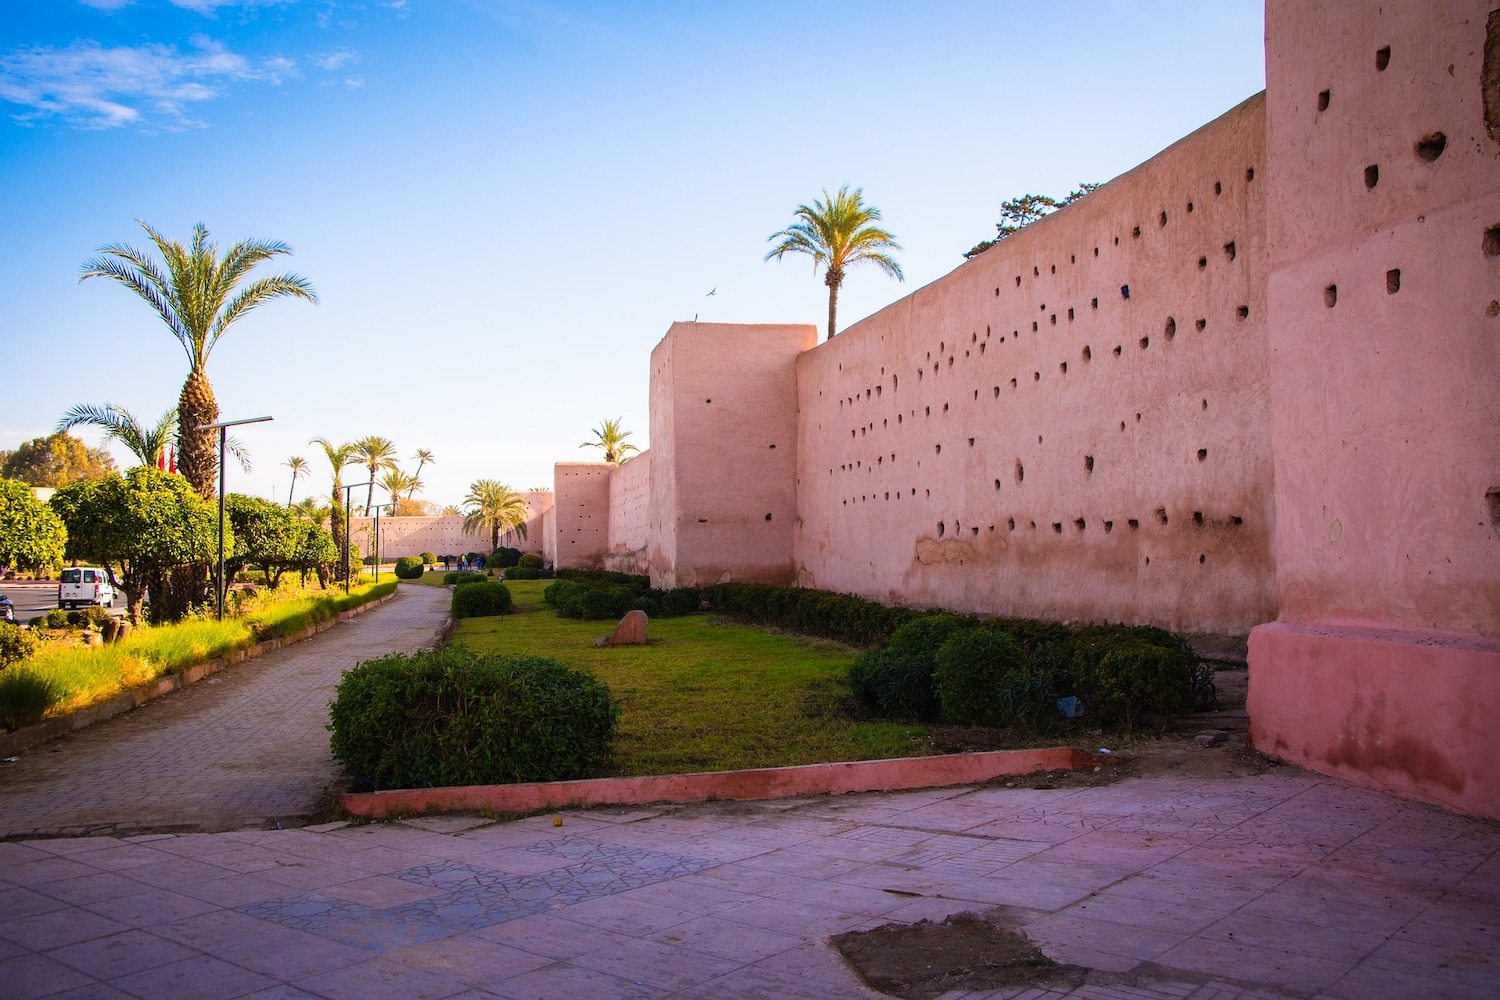 Marrakech travel information